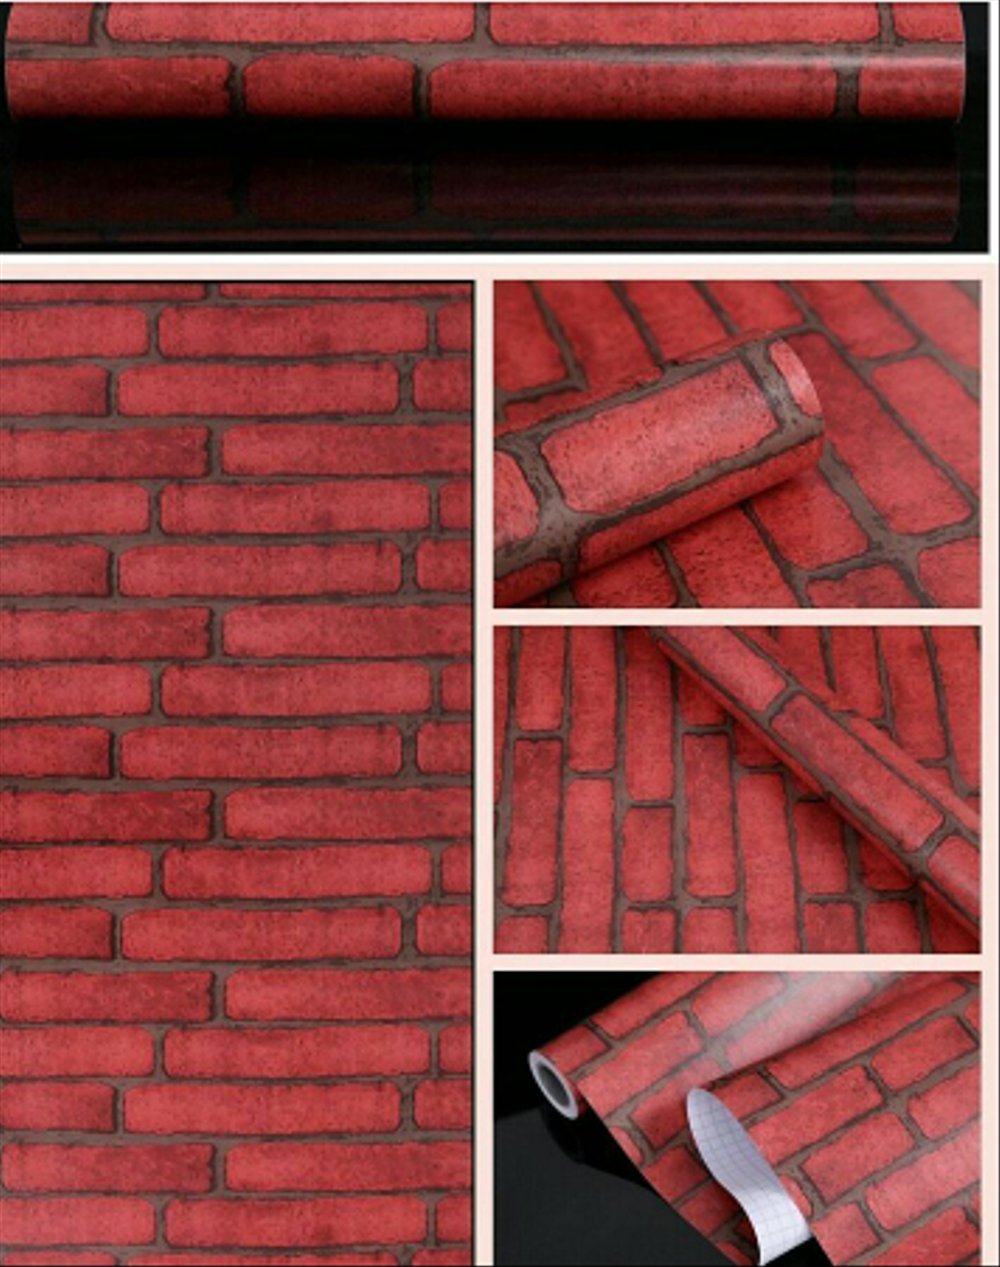 wallpaper sticker dinding,brick,red,brickwork,roof,wall